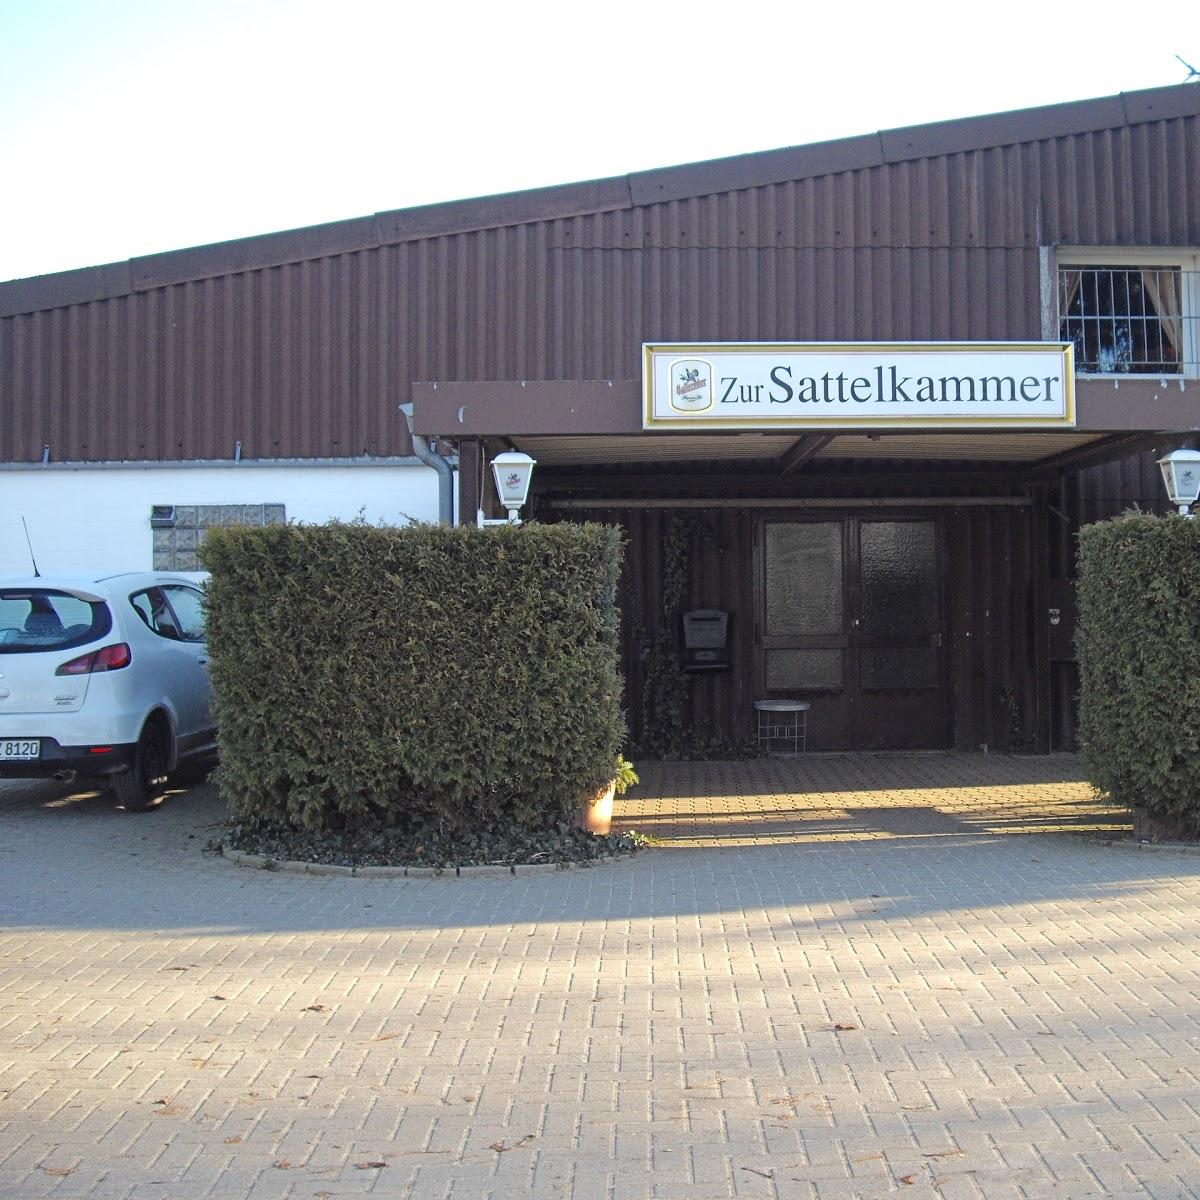 Restaurant "Zur Sattelkammer" in  Langenhagen